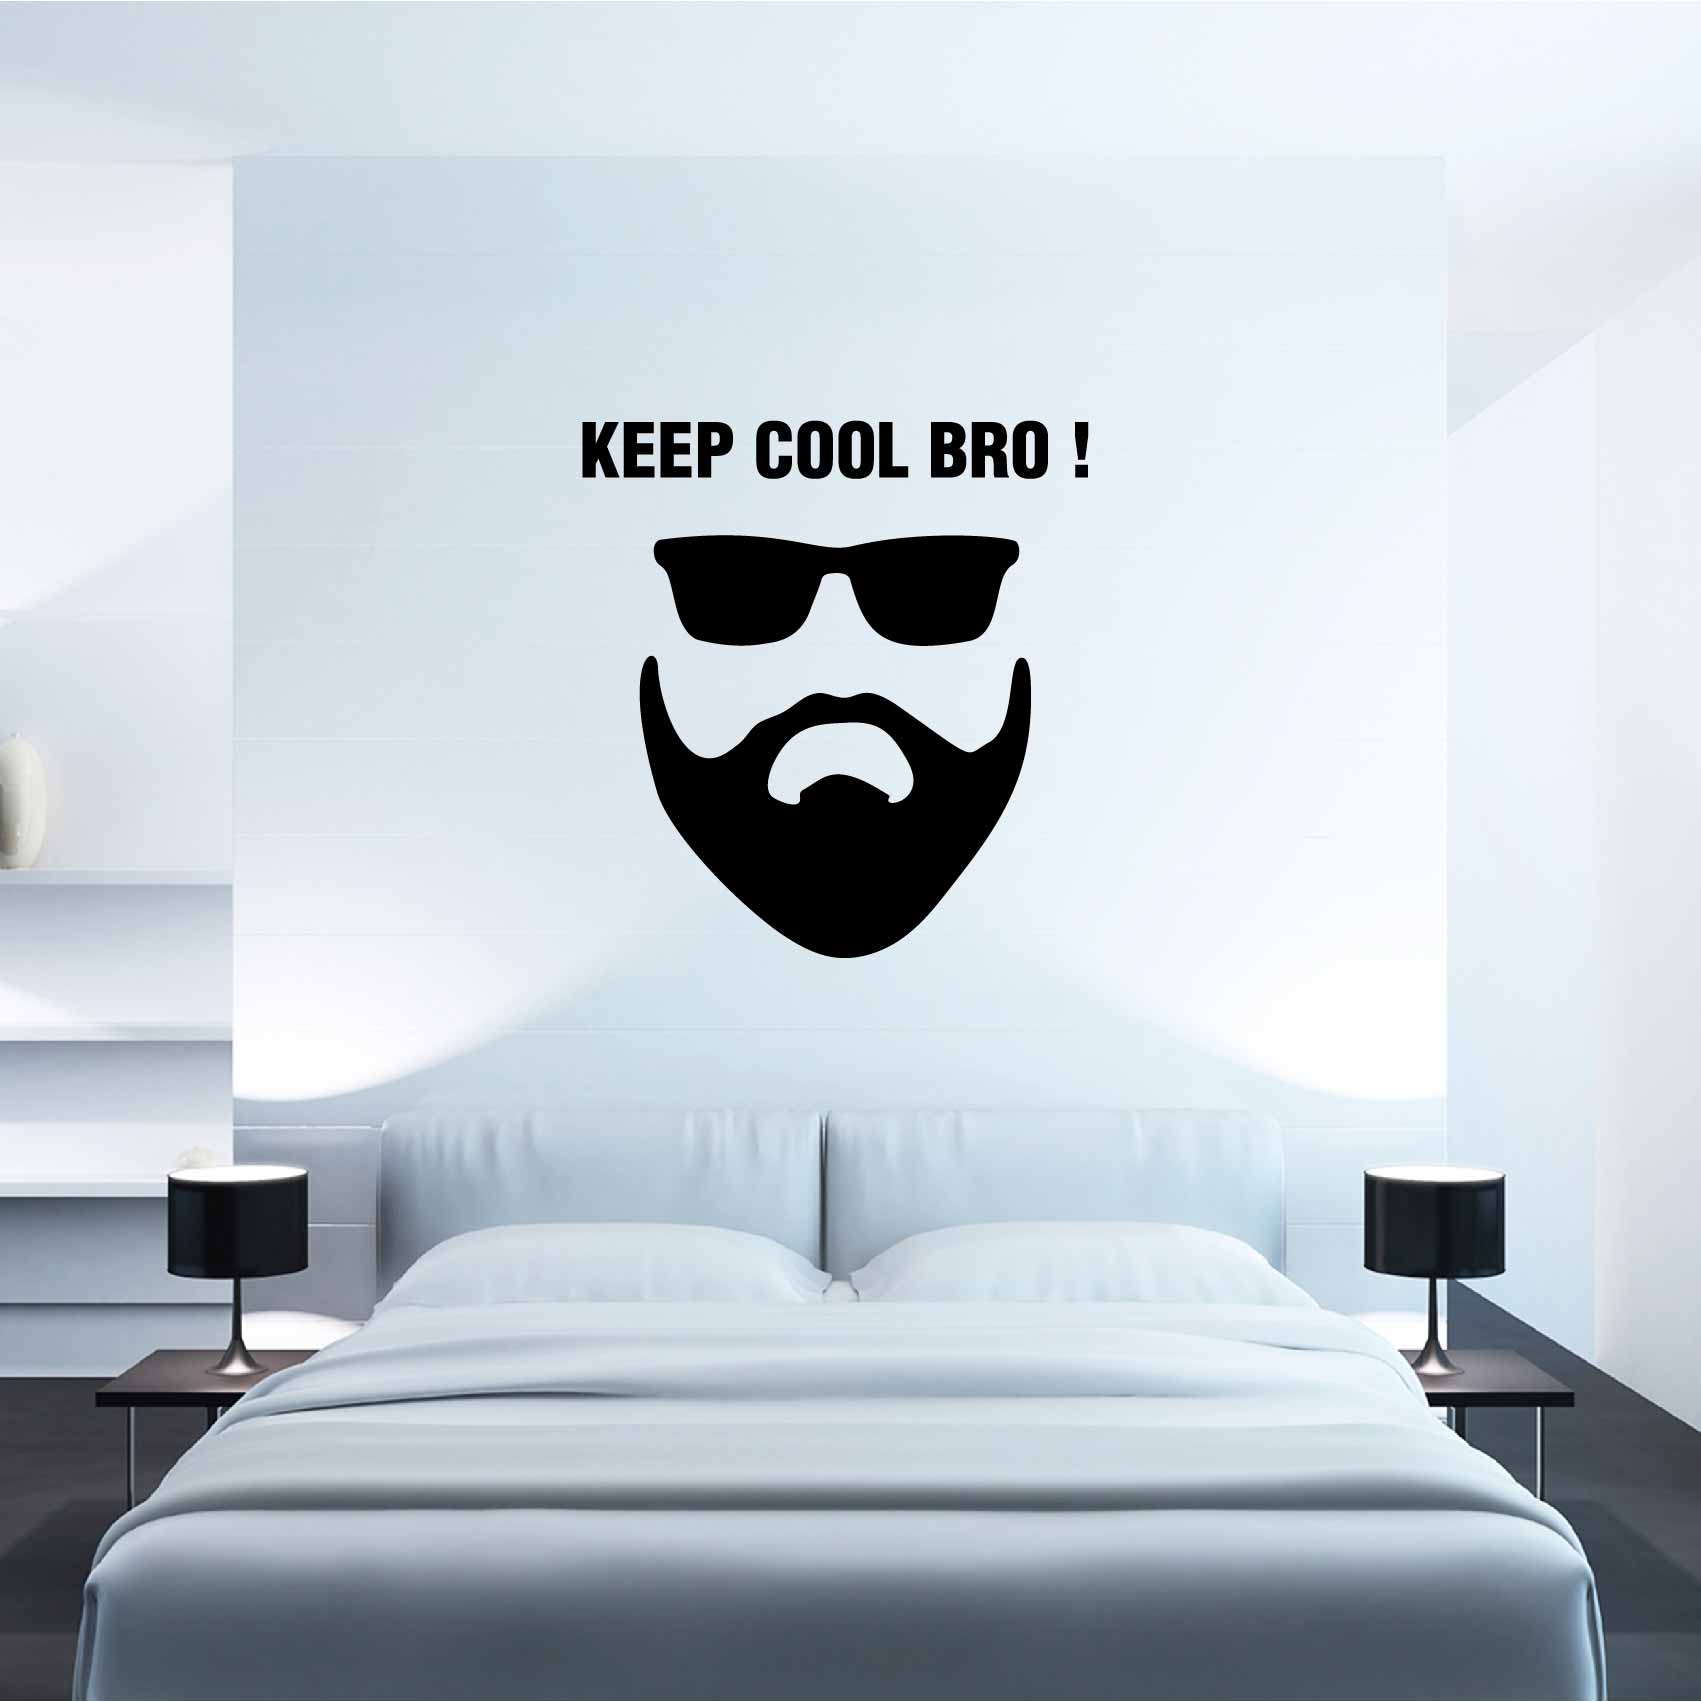 stickers-keep-cool-bro-barbe-lunettes-soleil-ref1keepcoolbro-autocollant-mural-stickers-muraux-sticker-deco-cuisine-salon-chambre-min